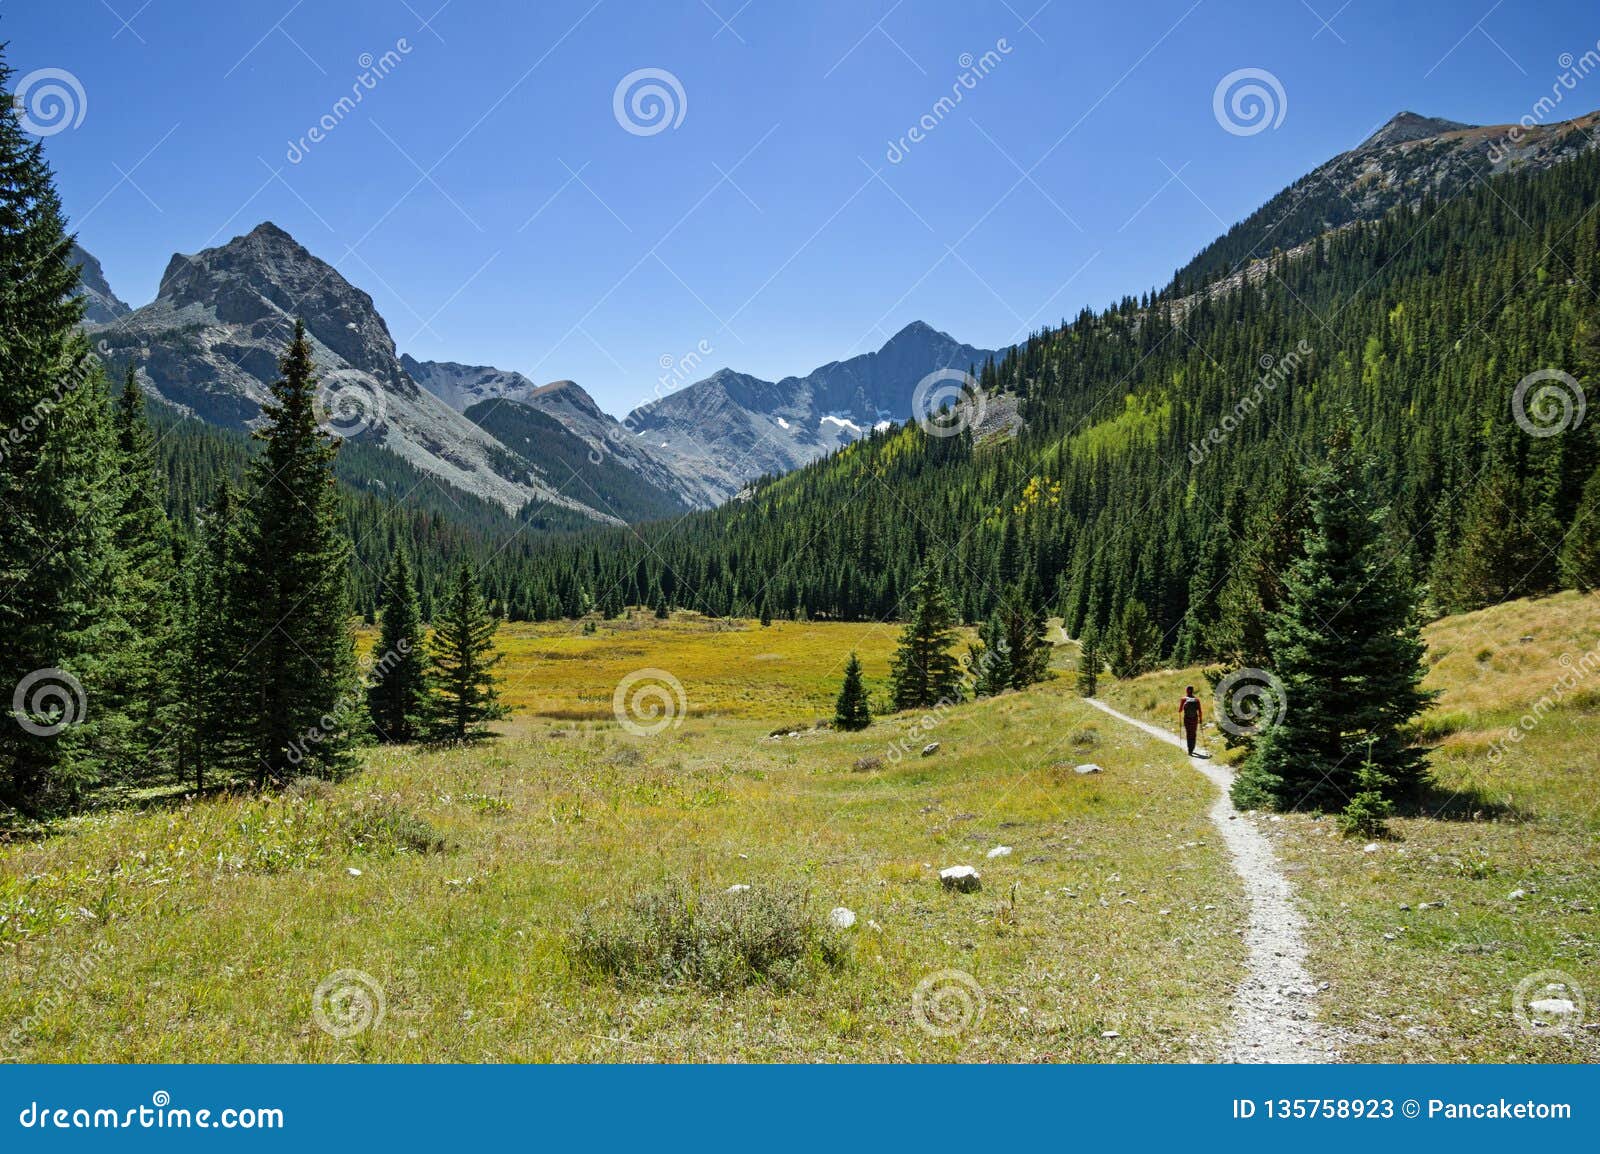 woman hiking away on sangre de cristo mountain trail